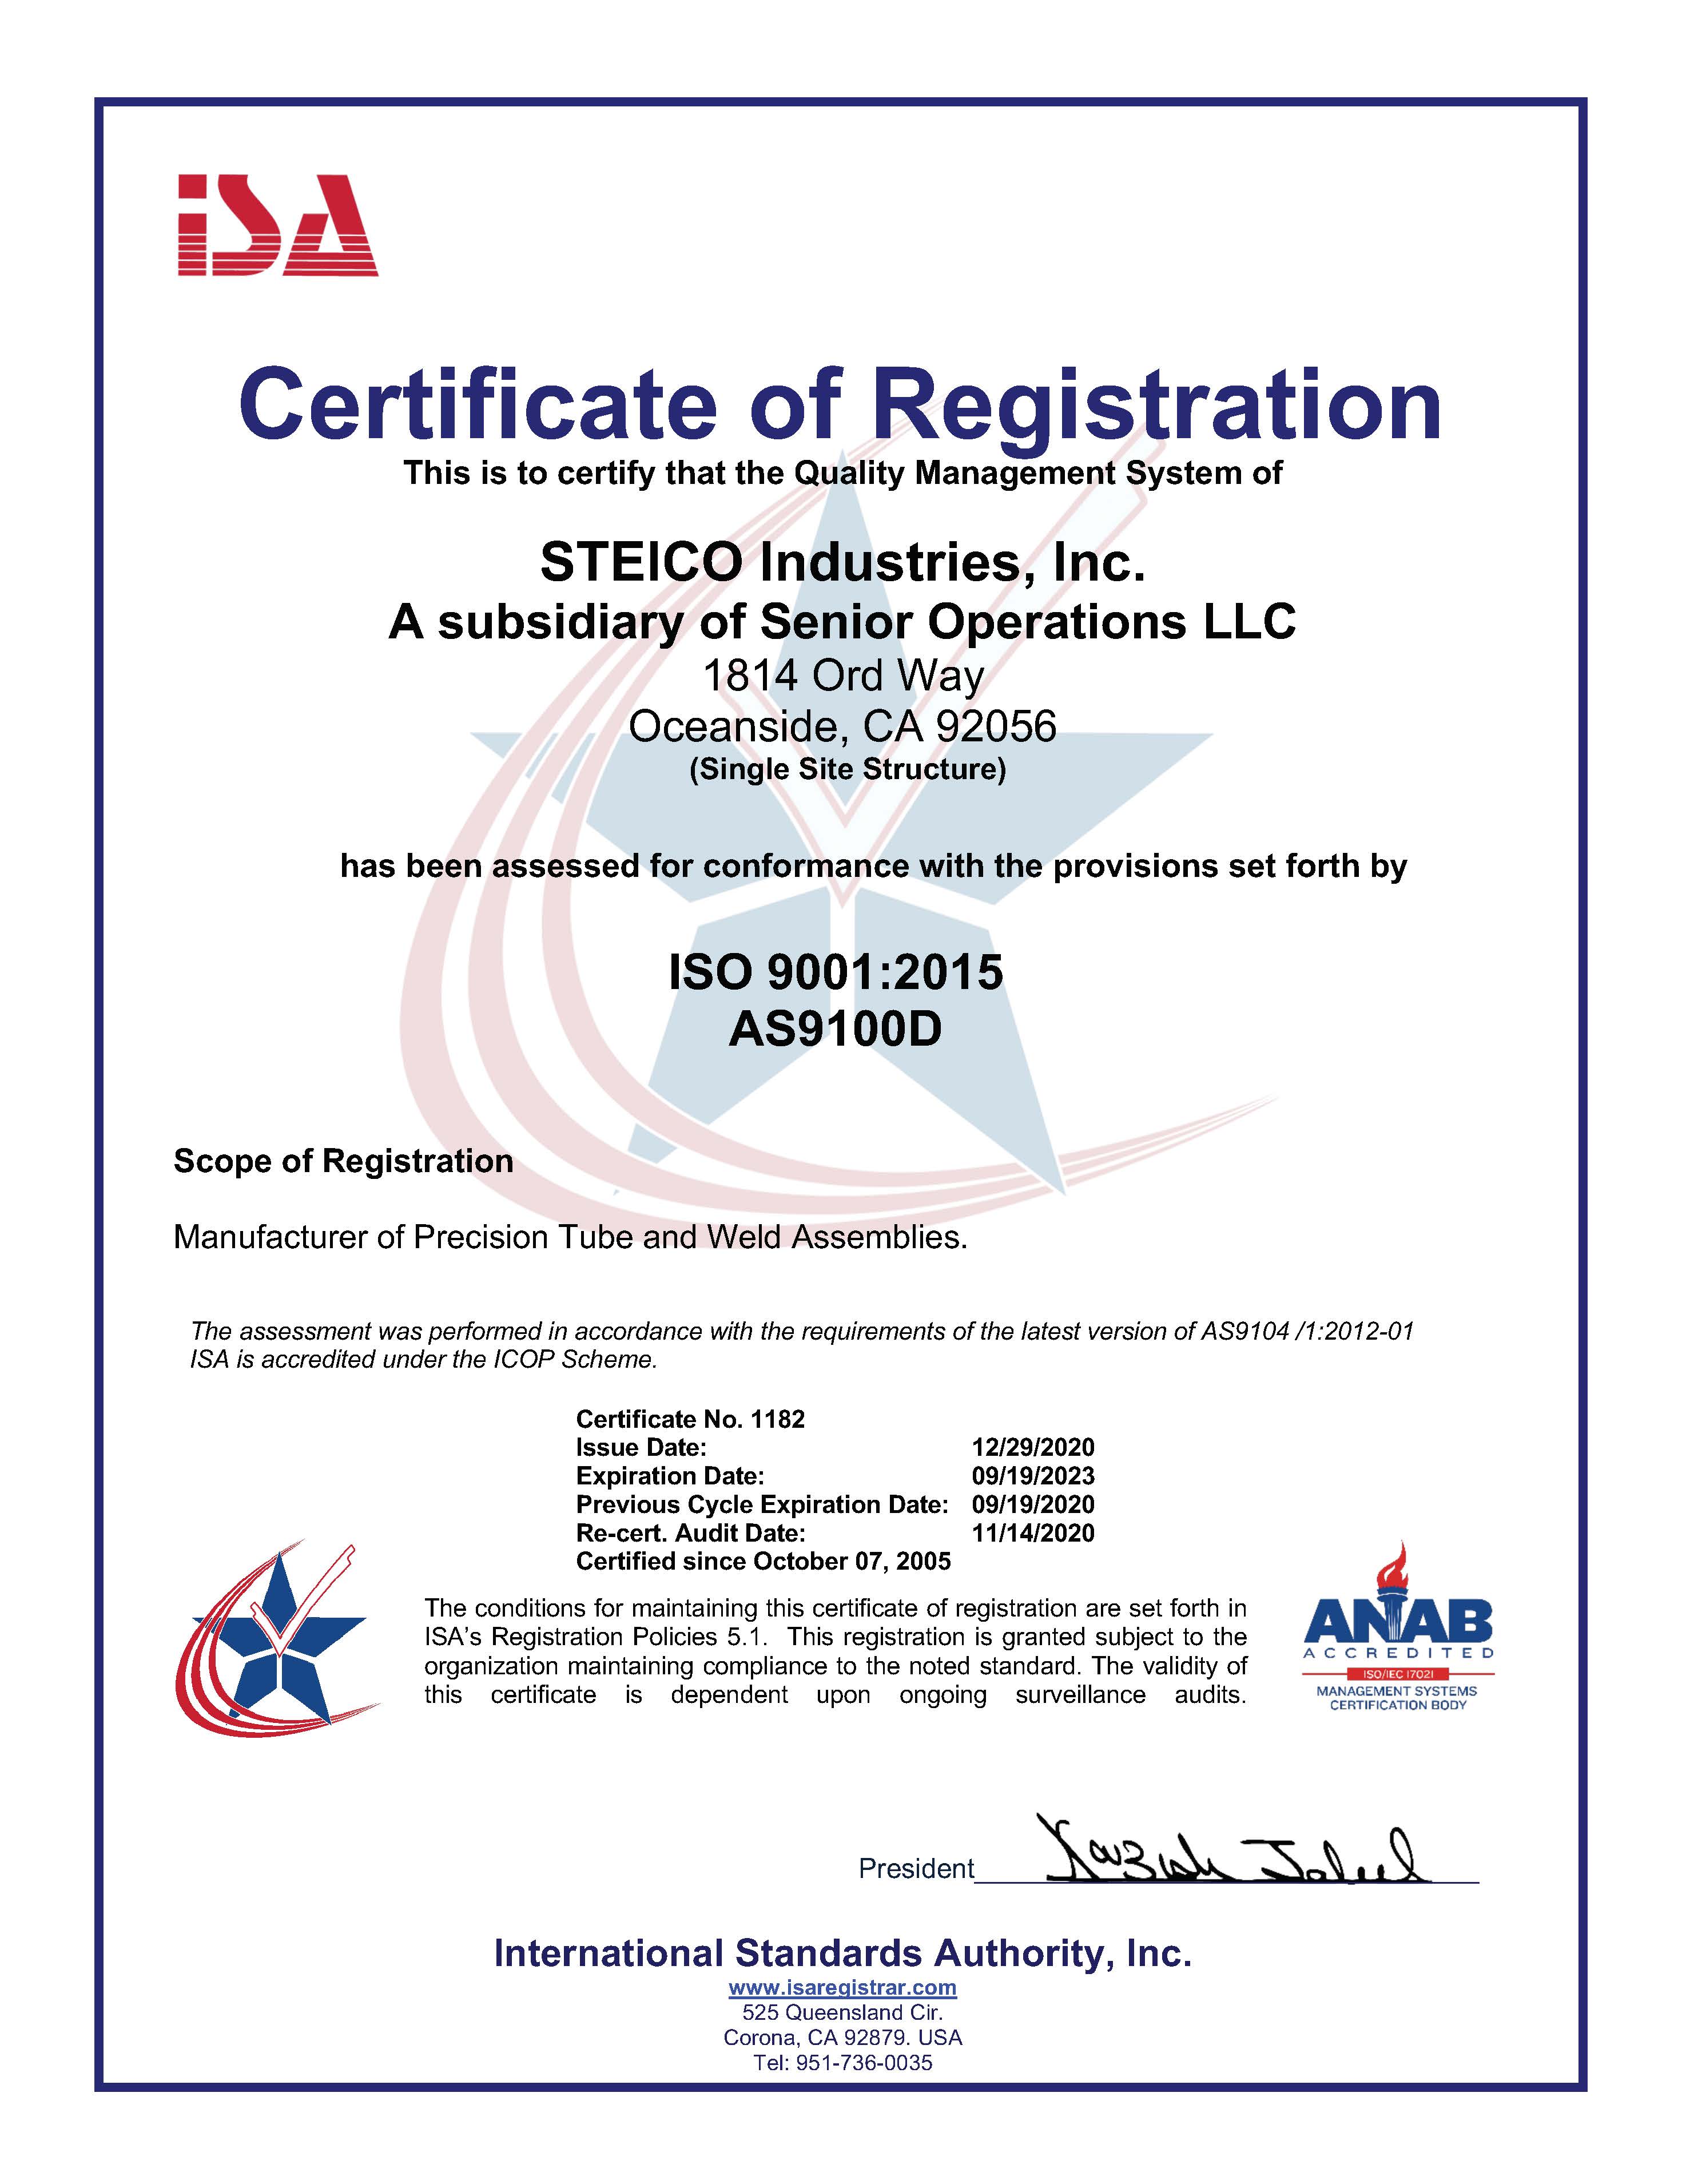 ISA AS9100D Certificate